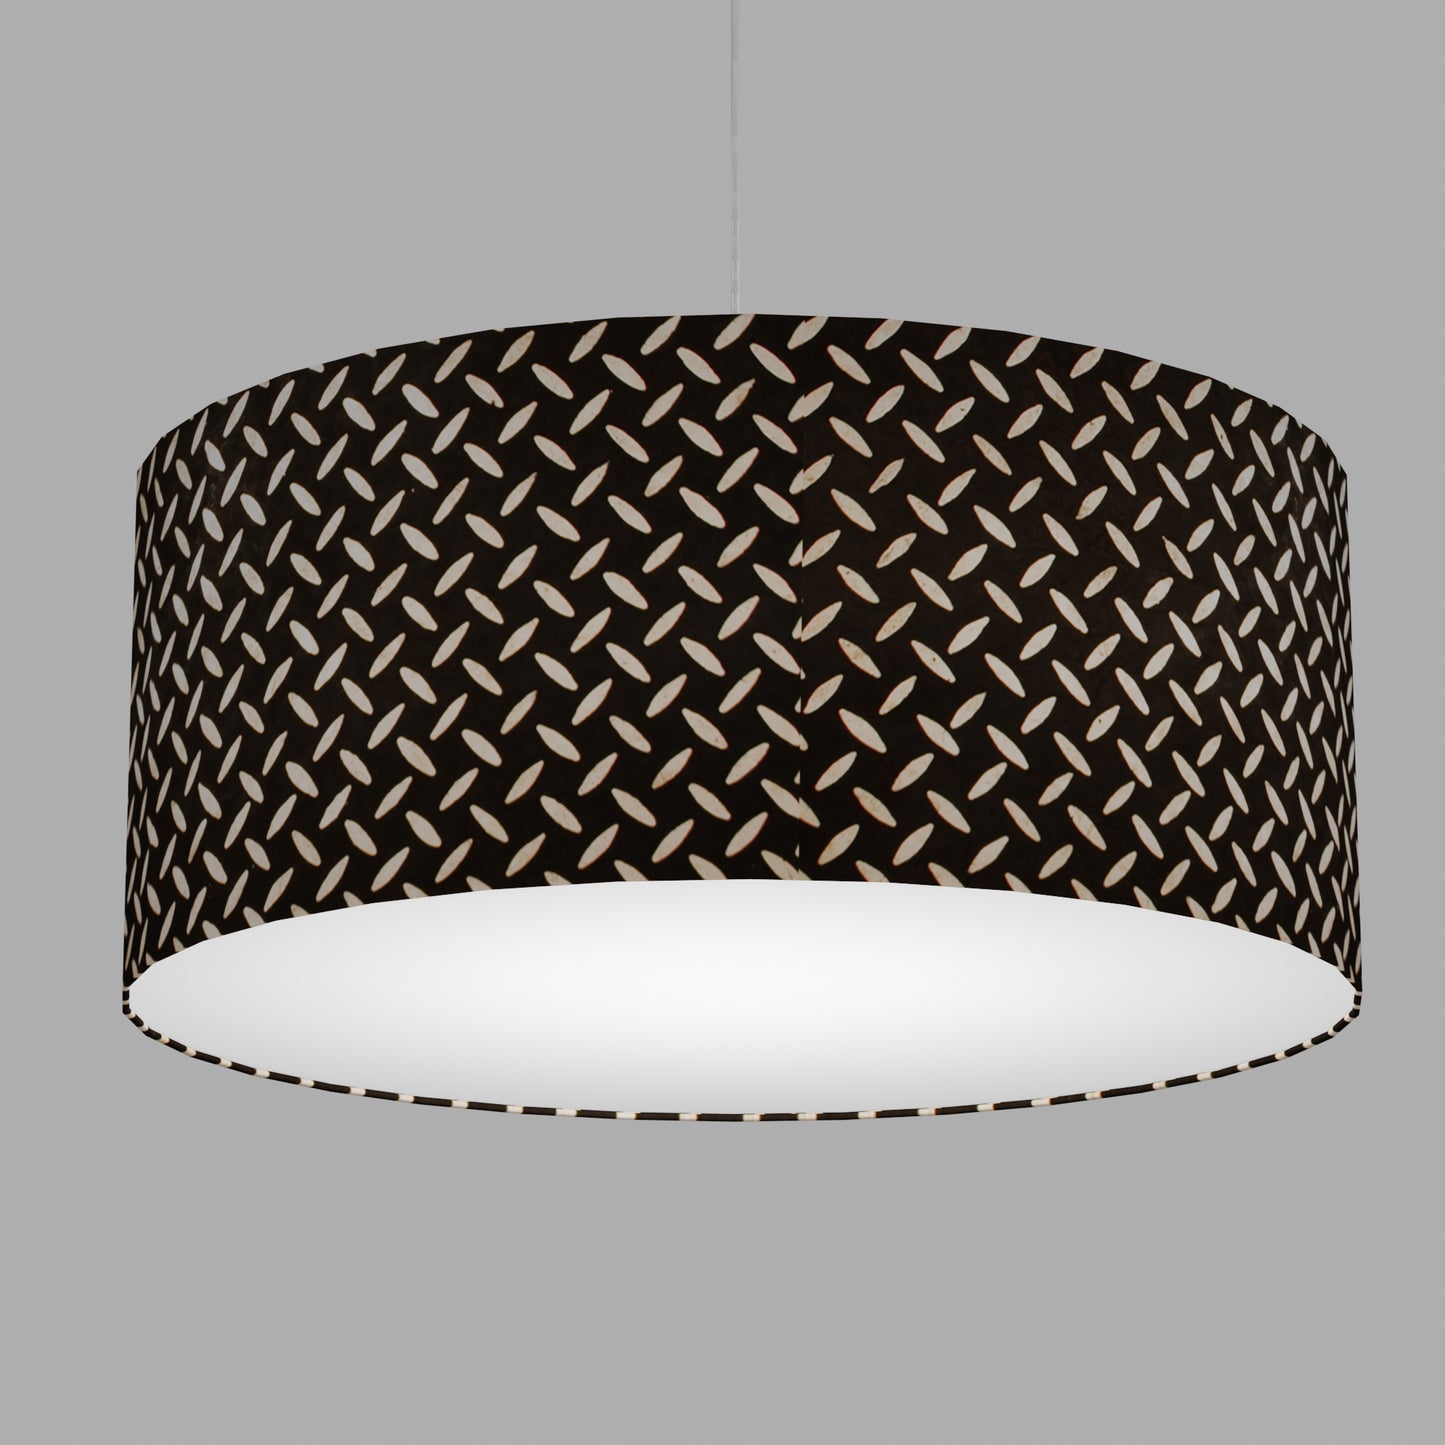 Drum Lamp Shade - P11 - Batik Tread Plate Black, 70cm(d) x 30cm(h)